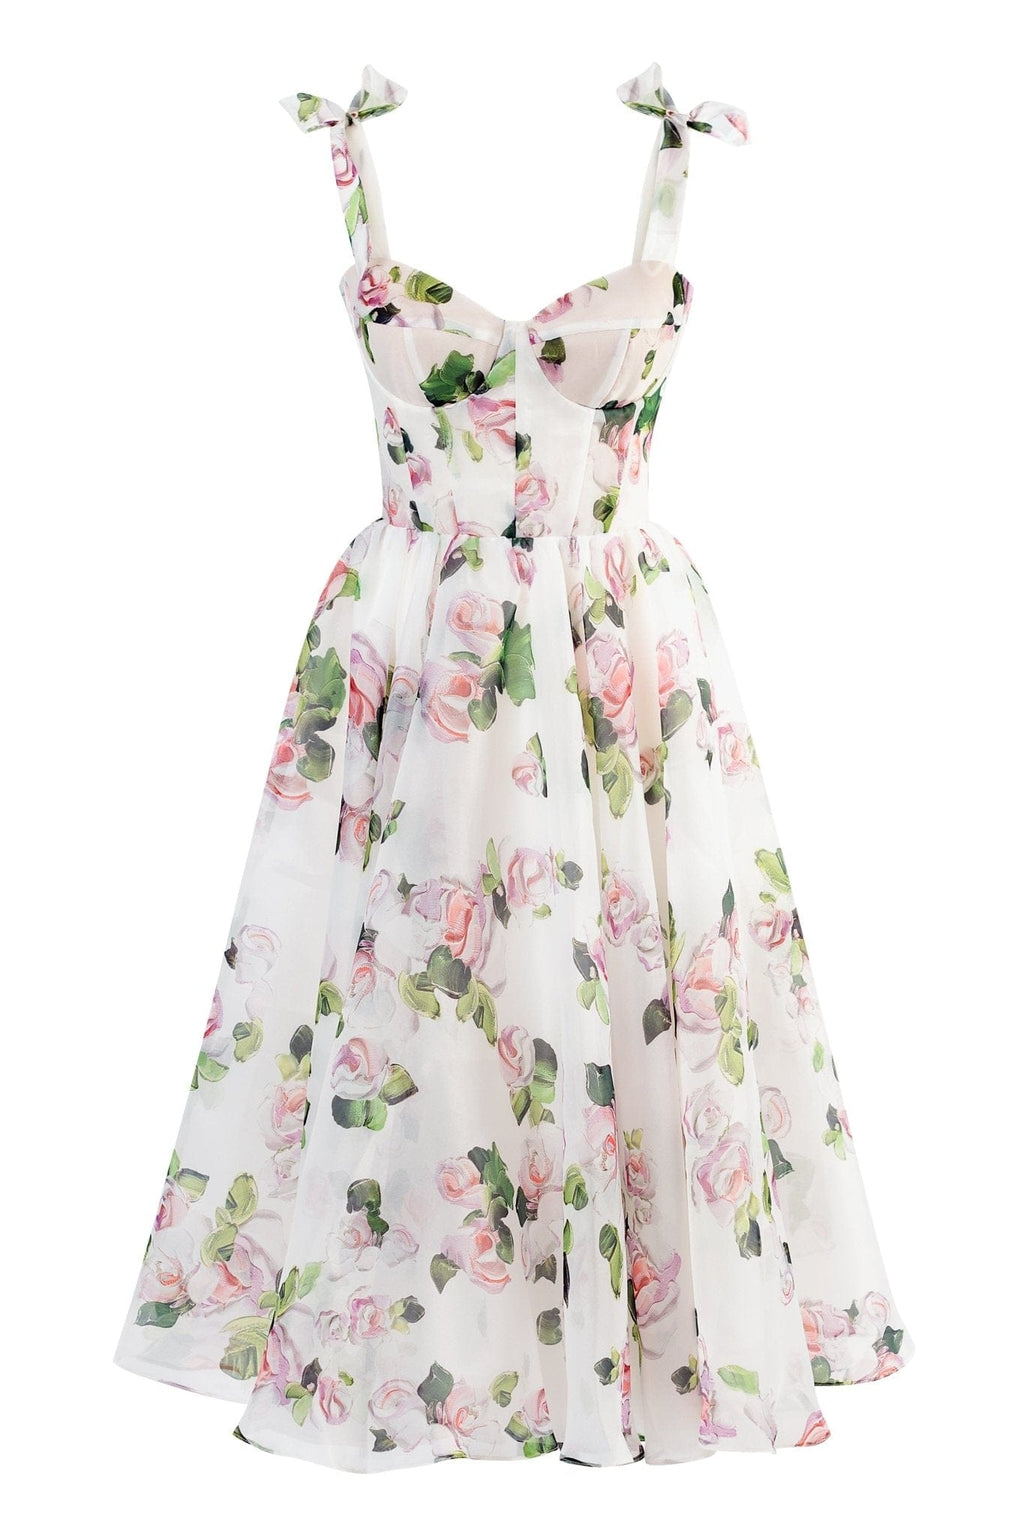 Shop Online Now | Little white dresses, Most beautiful wedding dresses,  White rehearsal dress